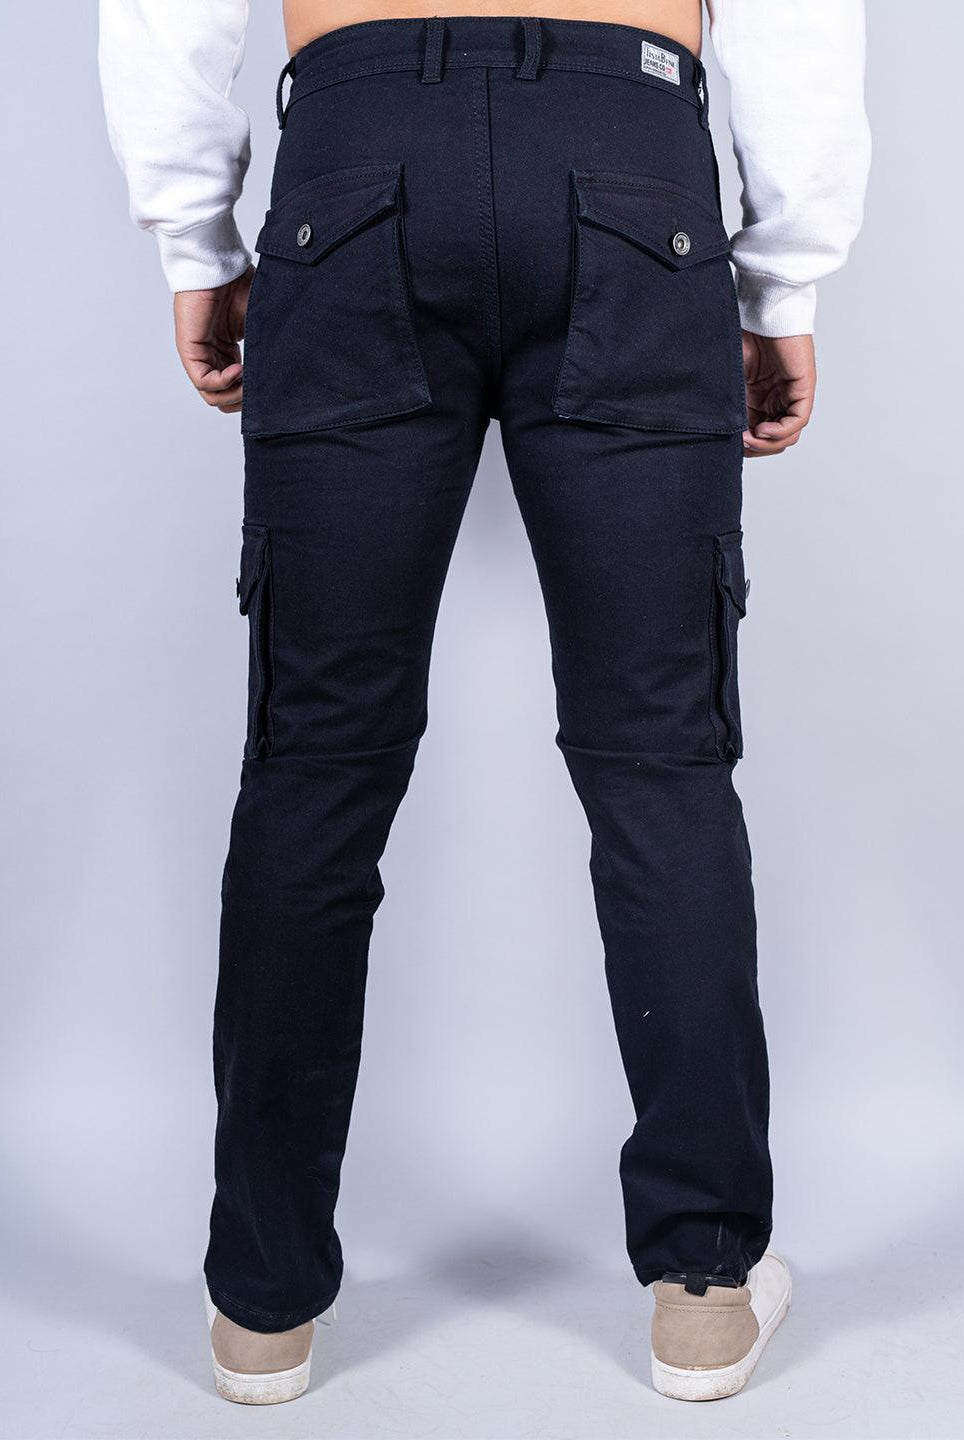 Solid Black Mens Cargo Pants - Tistabene